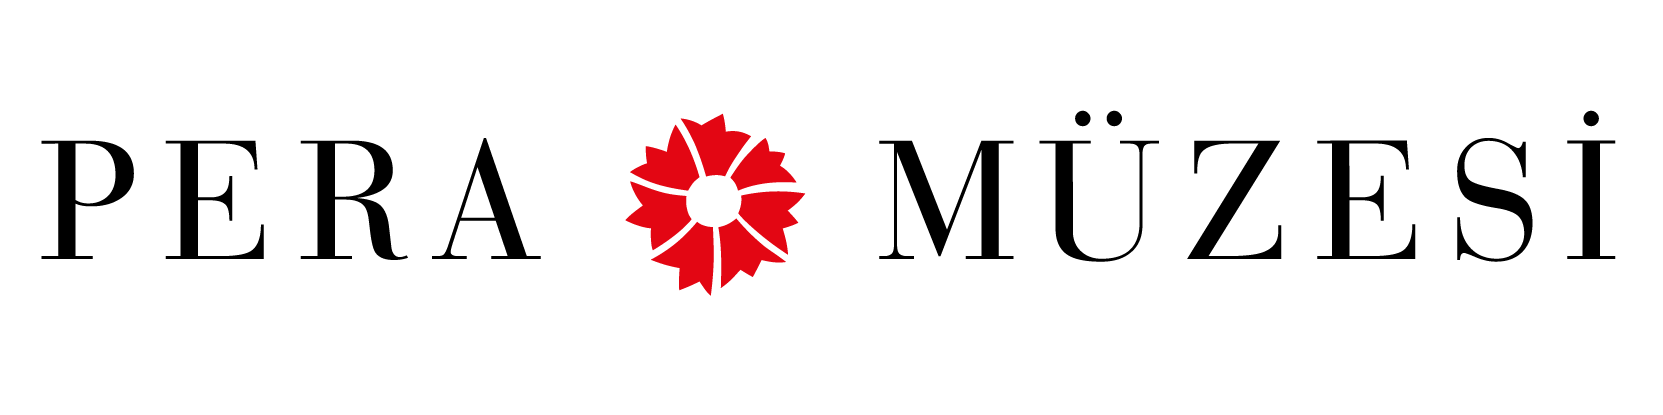 pera müzesi logo-01